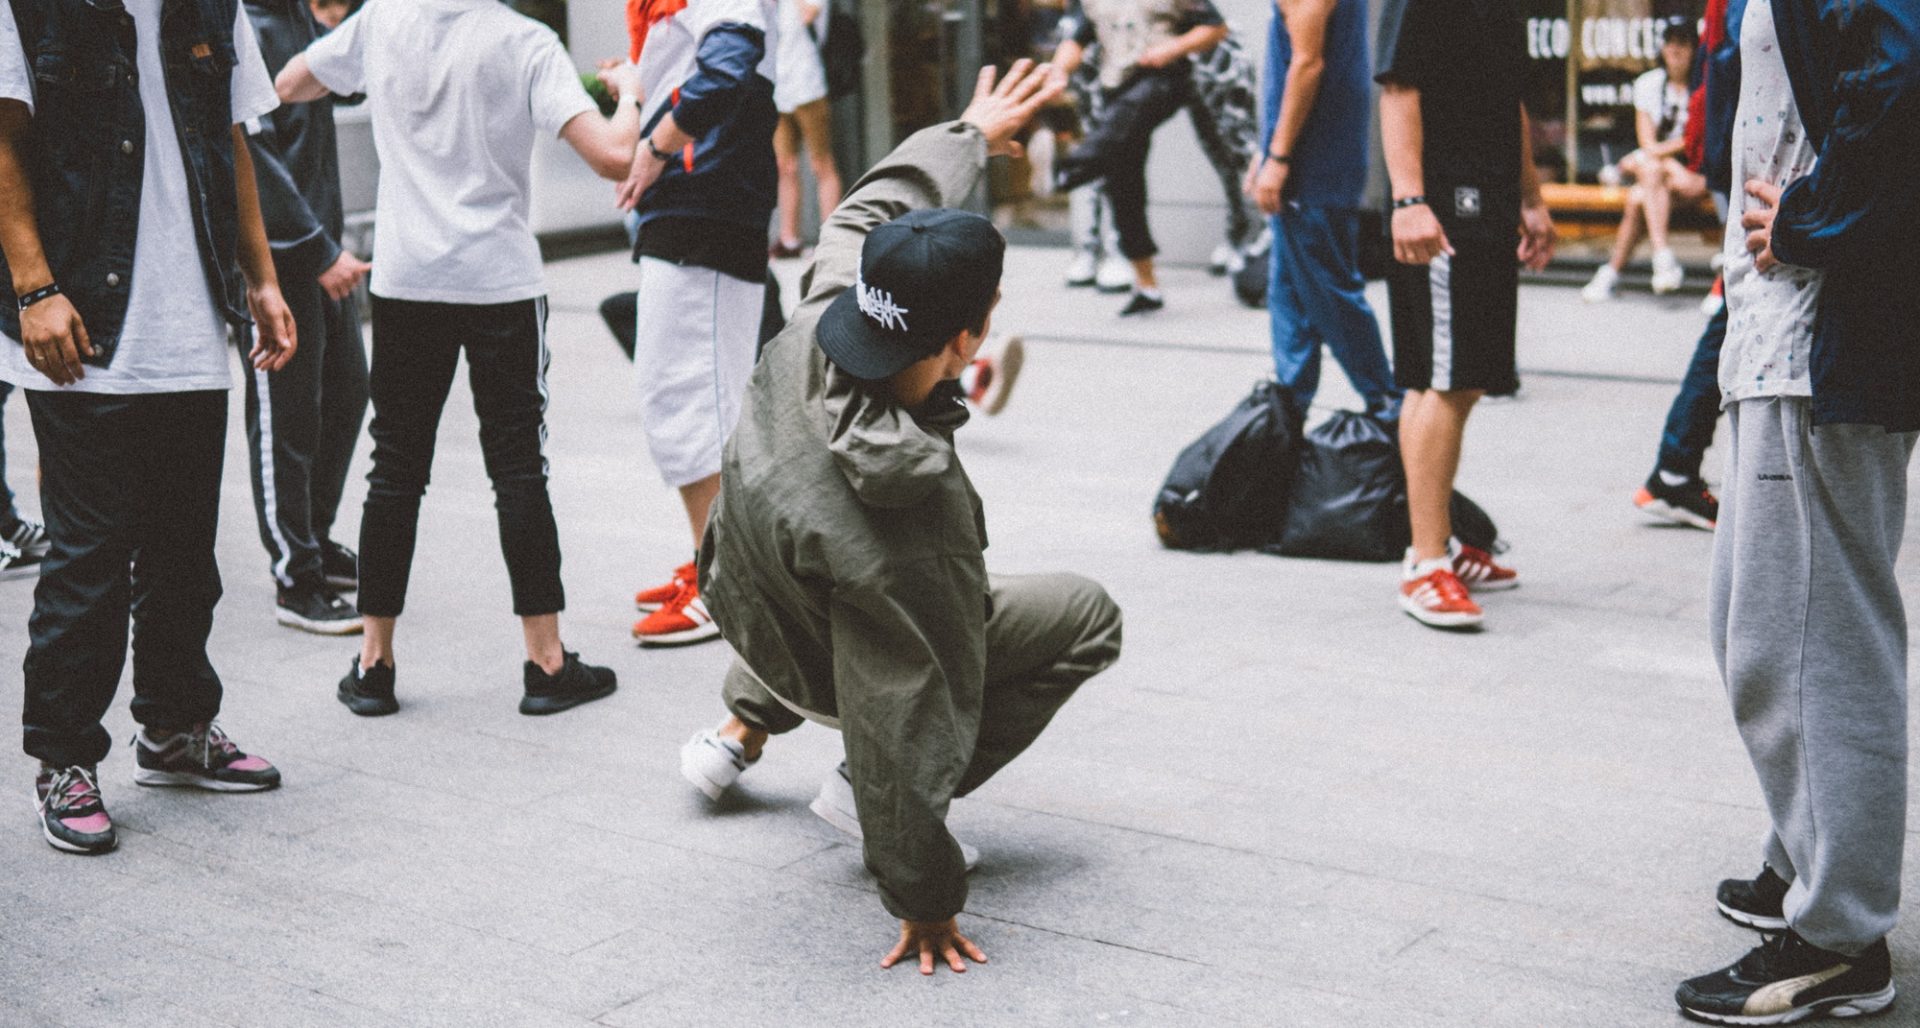 B-boy breakdance freestyle urban dance battle